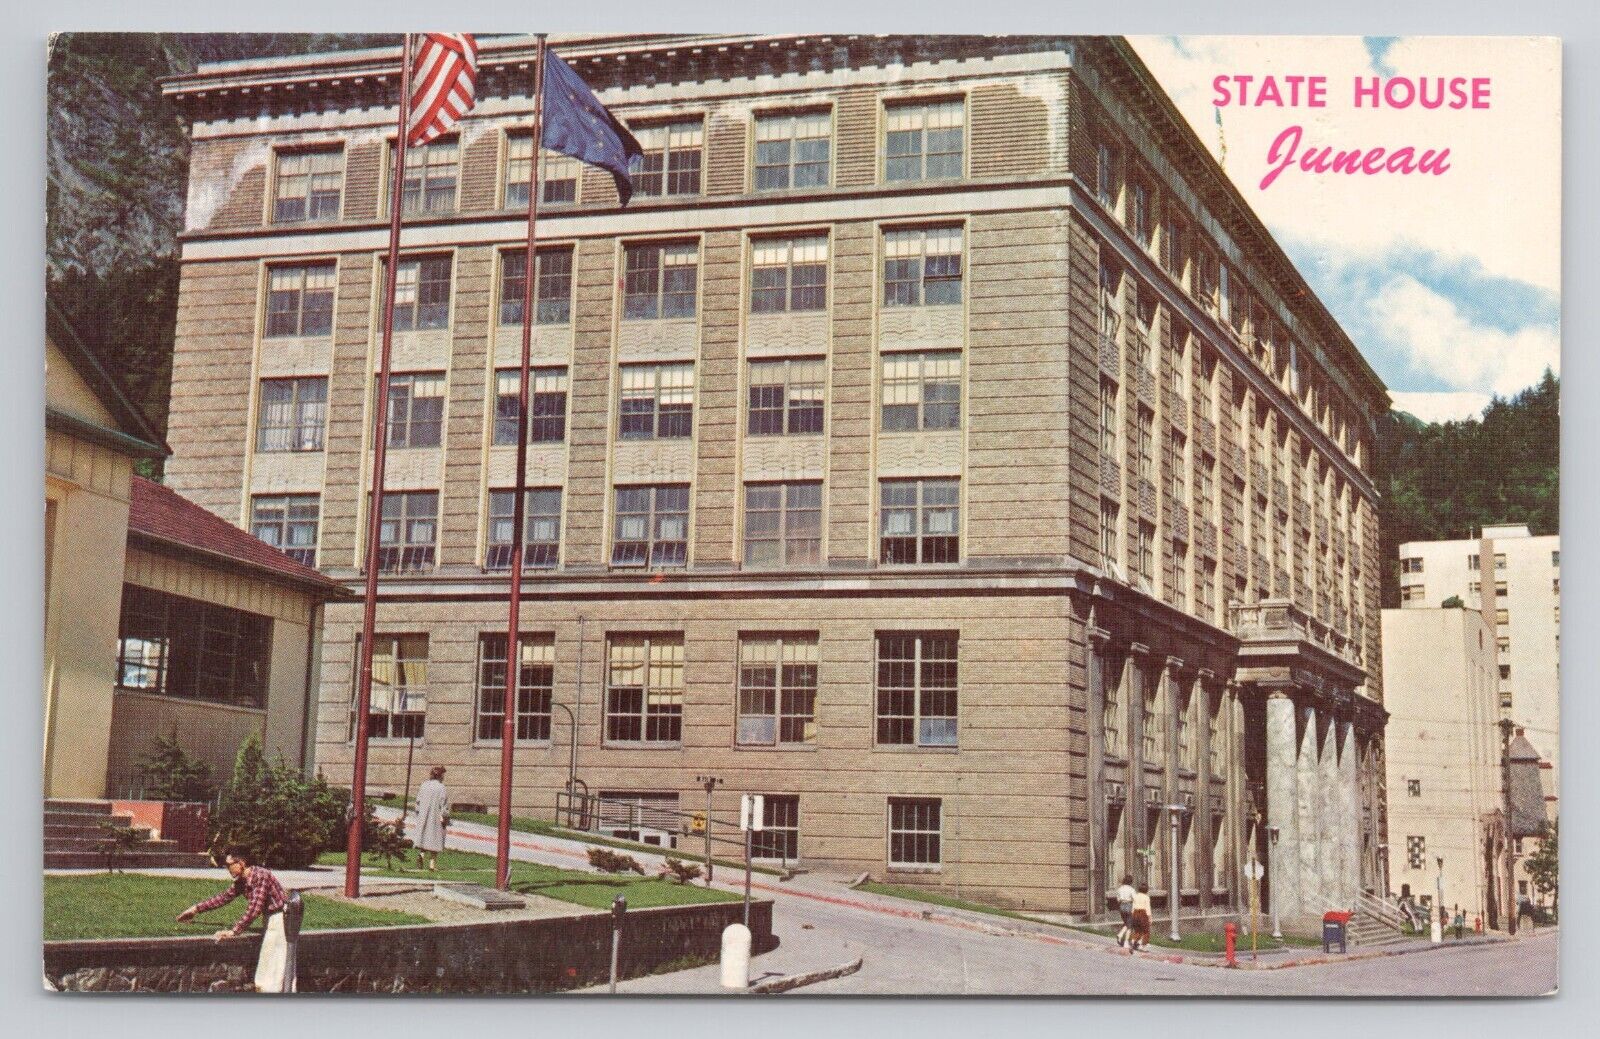 Juneau The Capitol of Alaska State House Federal Building Chrome Postcard 55